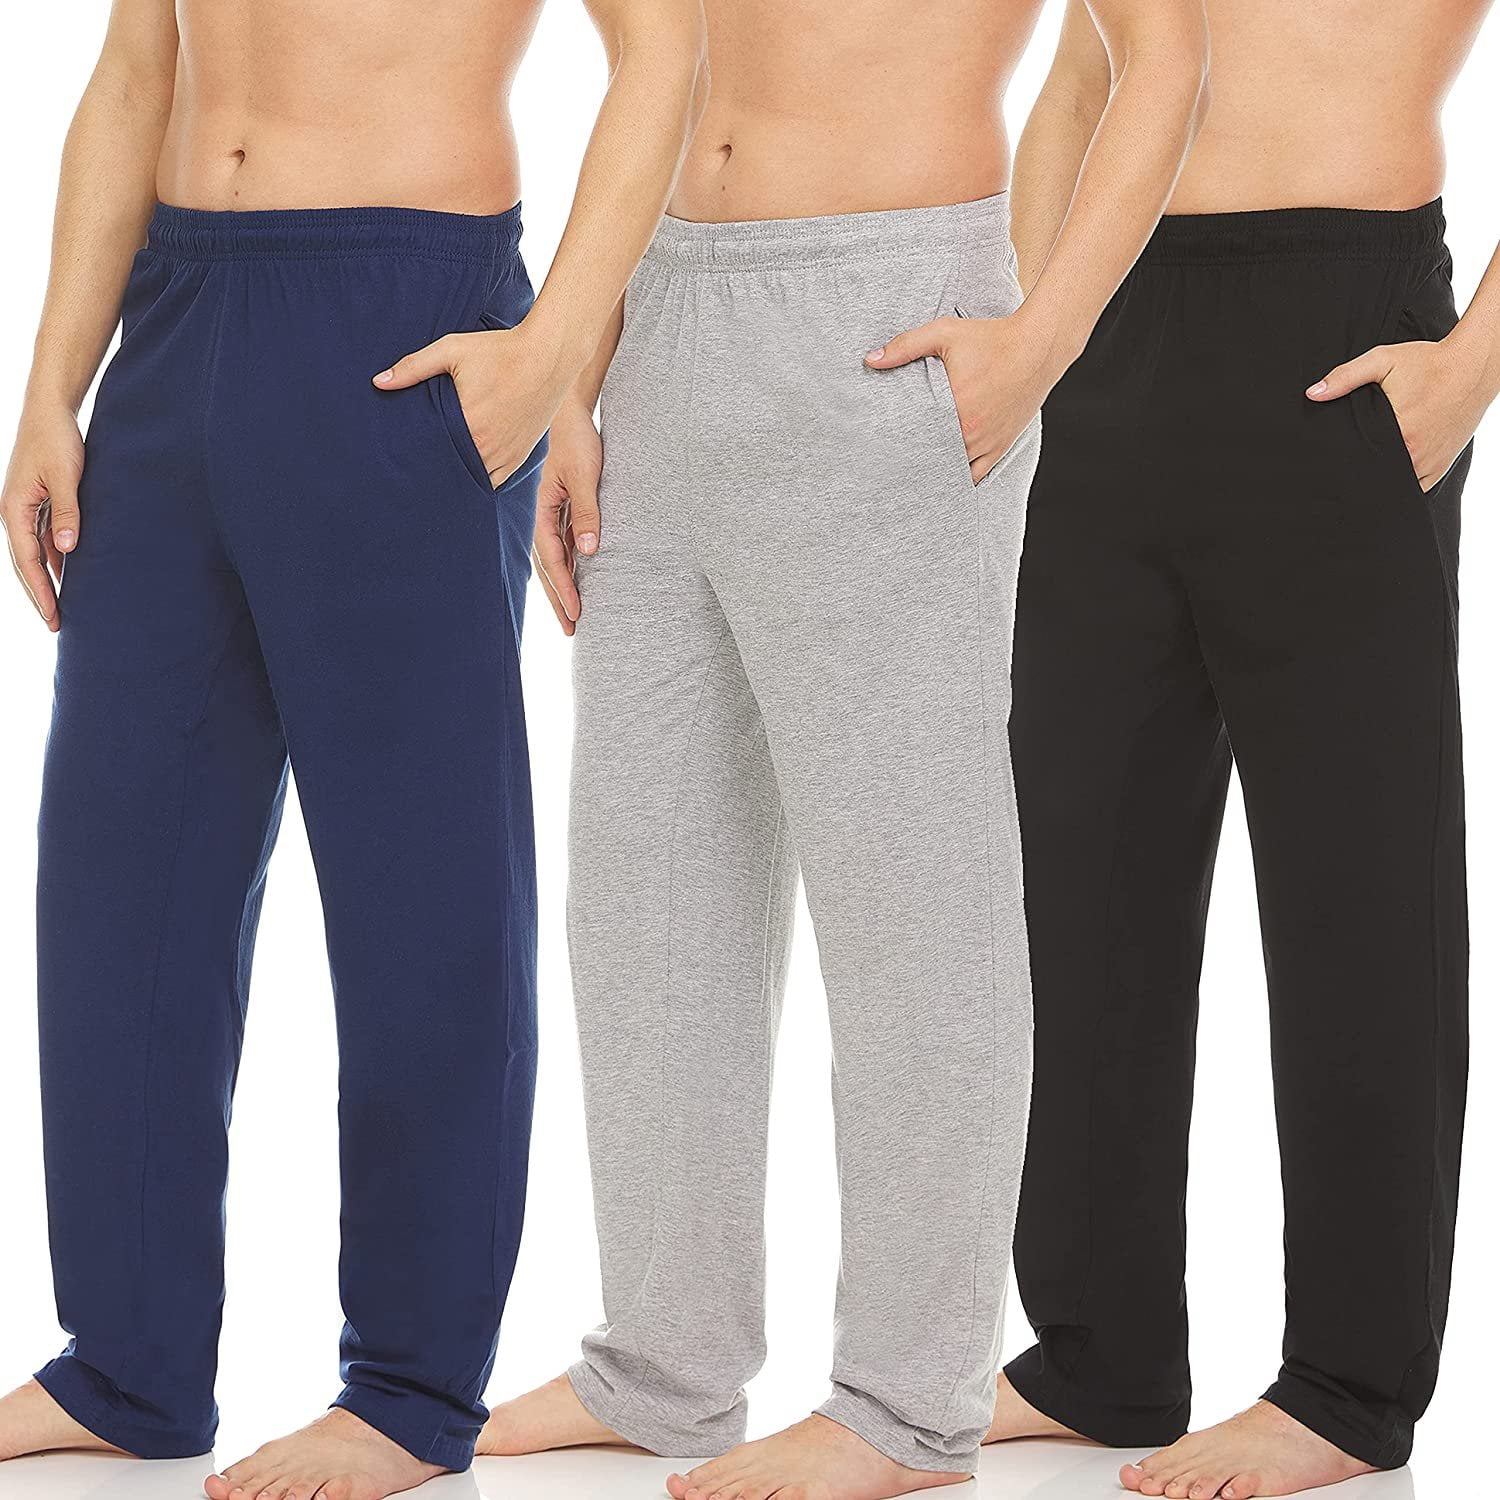 Details about   Hot Men's Soft Loose Lounge Pants Comfortable Lacing Home Pants Sleepwear S-2XL 